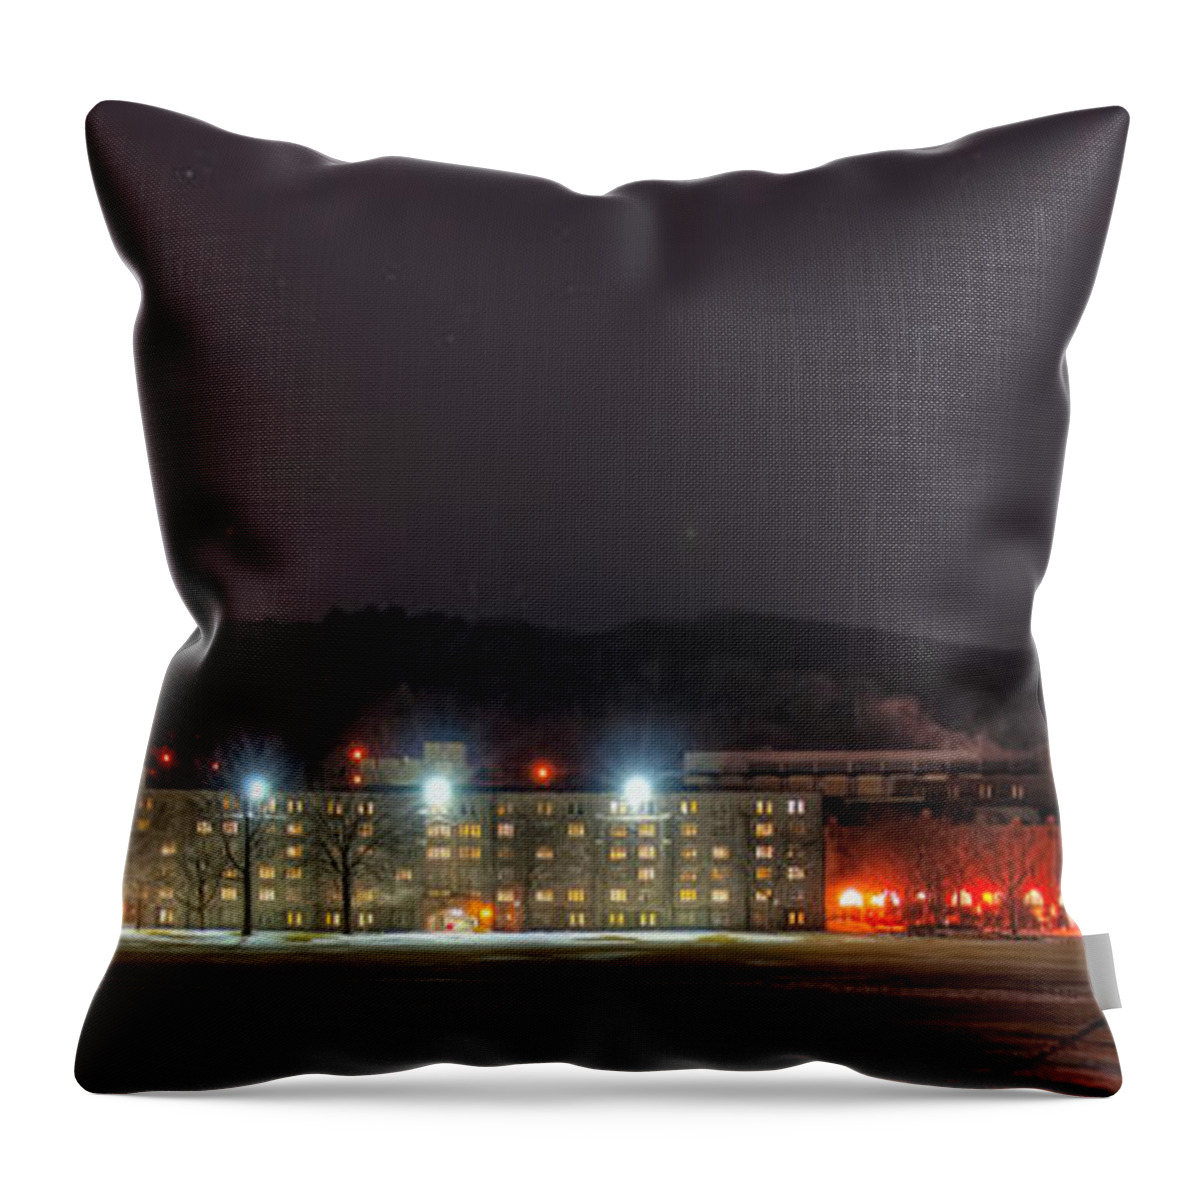 Usma Throw Pillow featuring the photograph Washington Hall at Night by Dan McManus